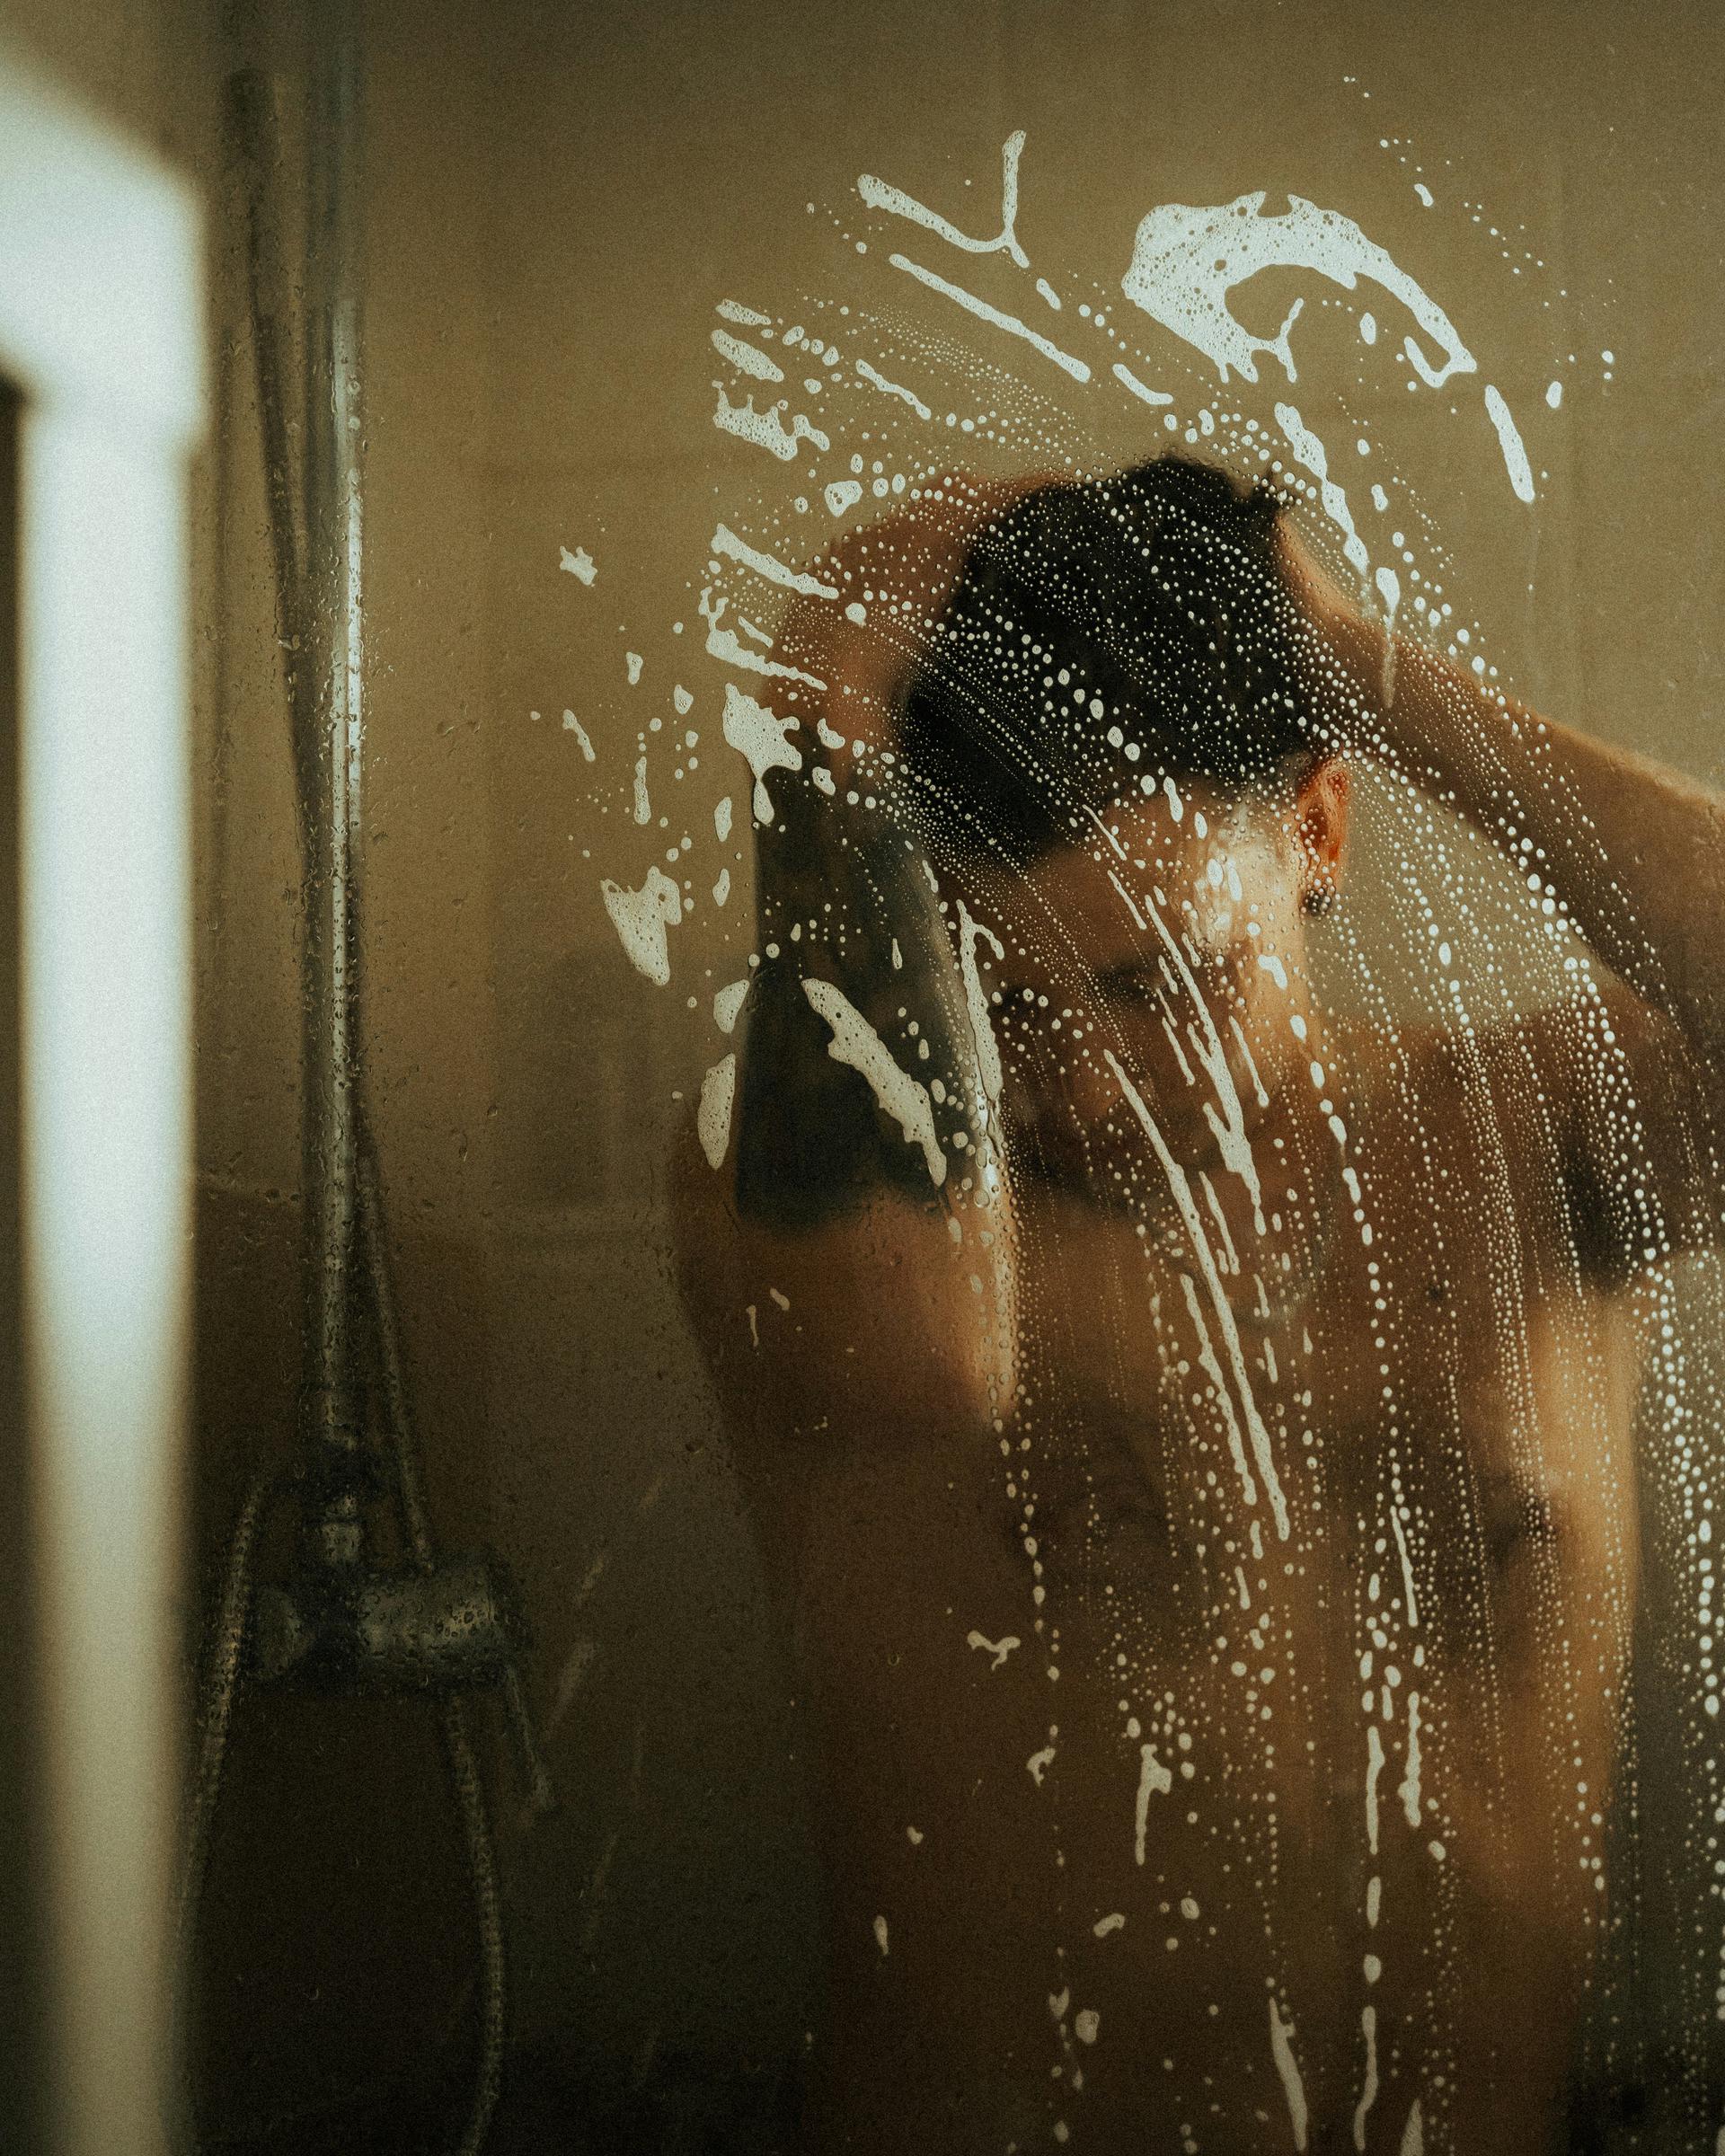 A man taking a shower | Source: Unsplash